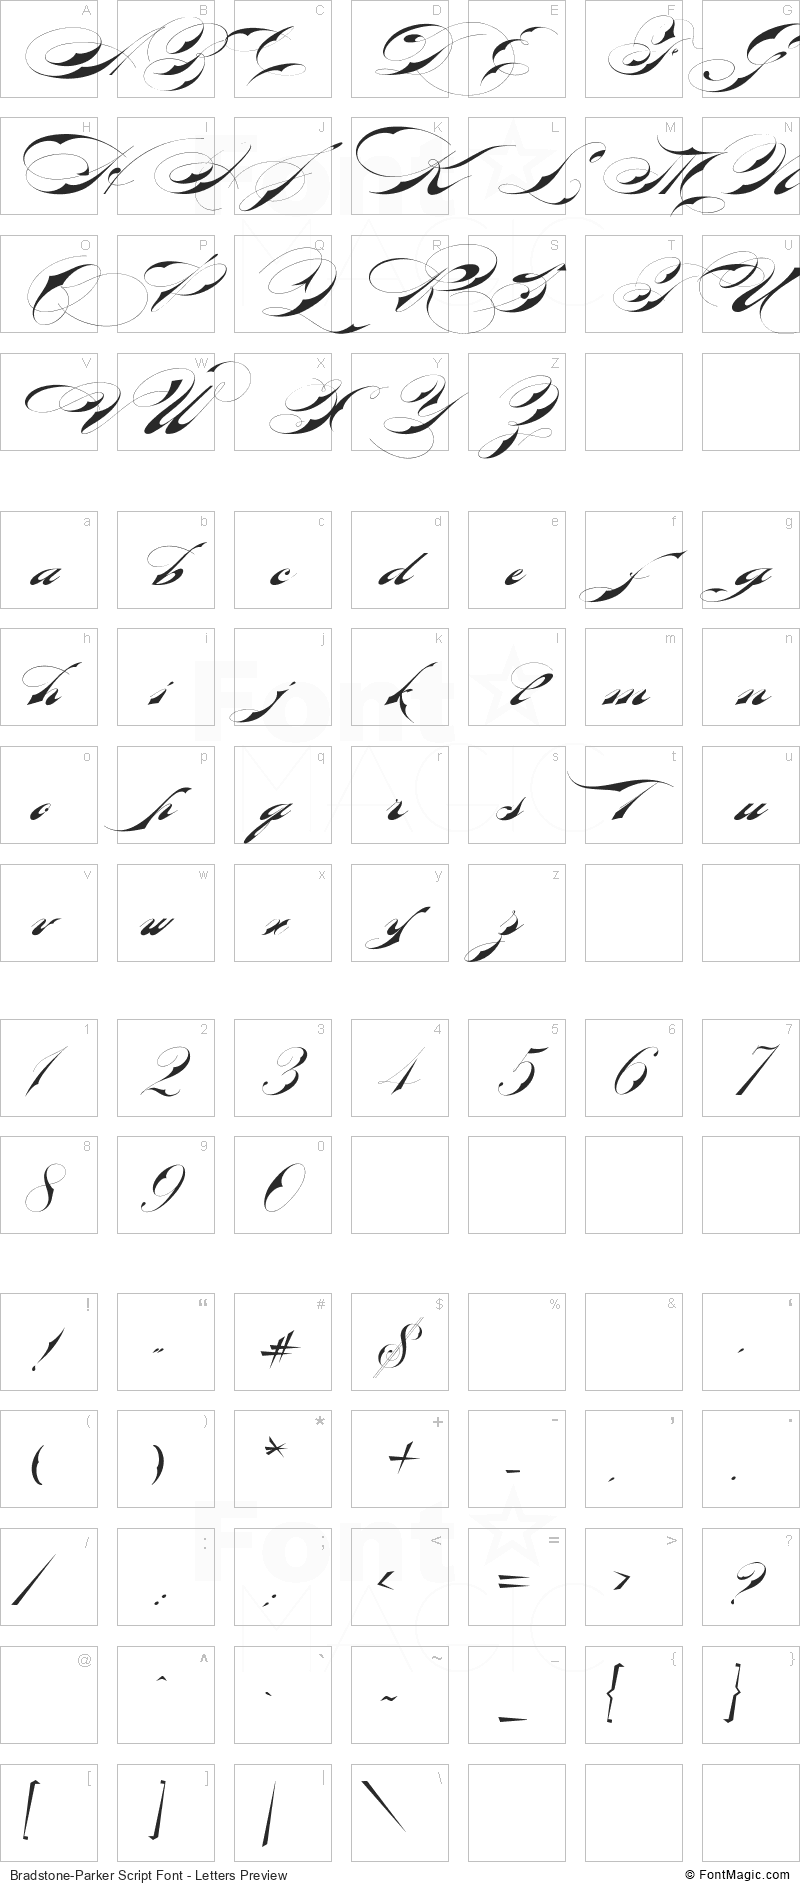 Bradstone-Parker Script Font - All Latters Preview Chart